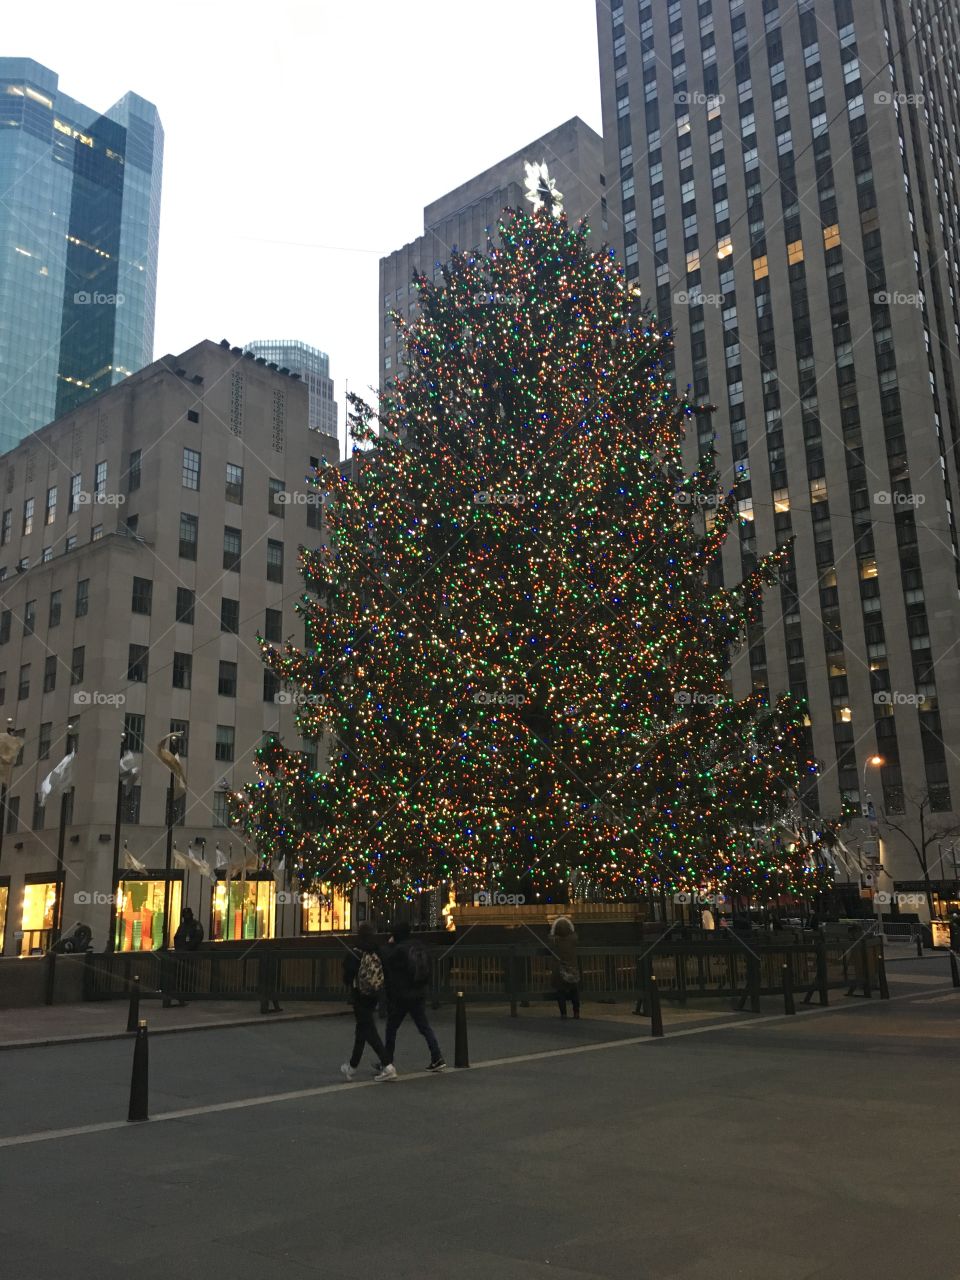 The Rockefeller Christmas tree 🎄 